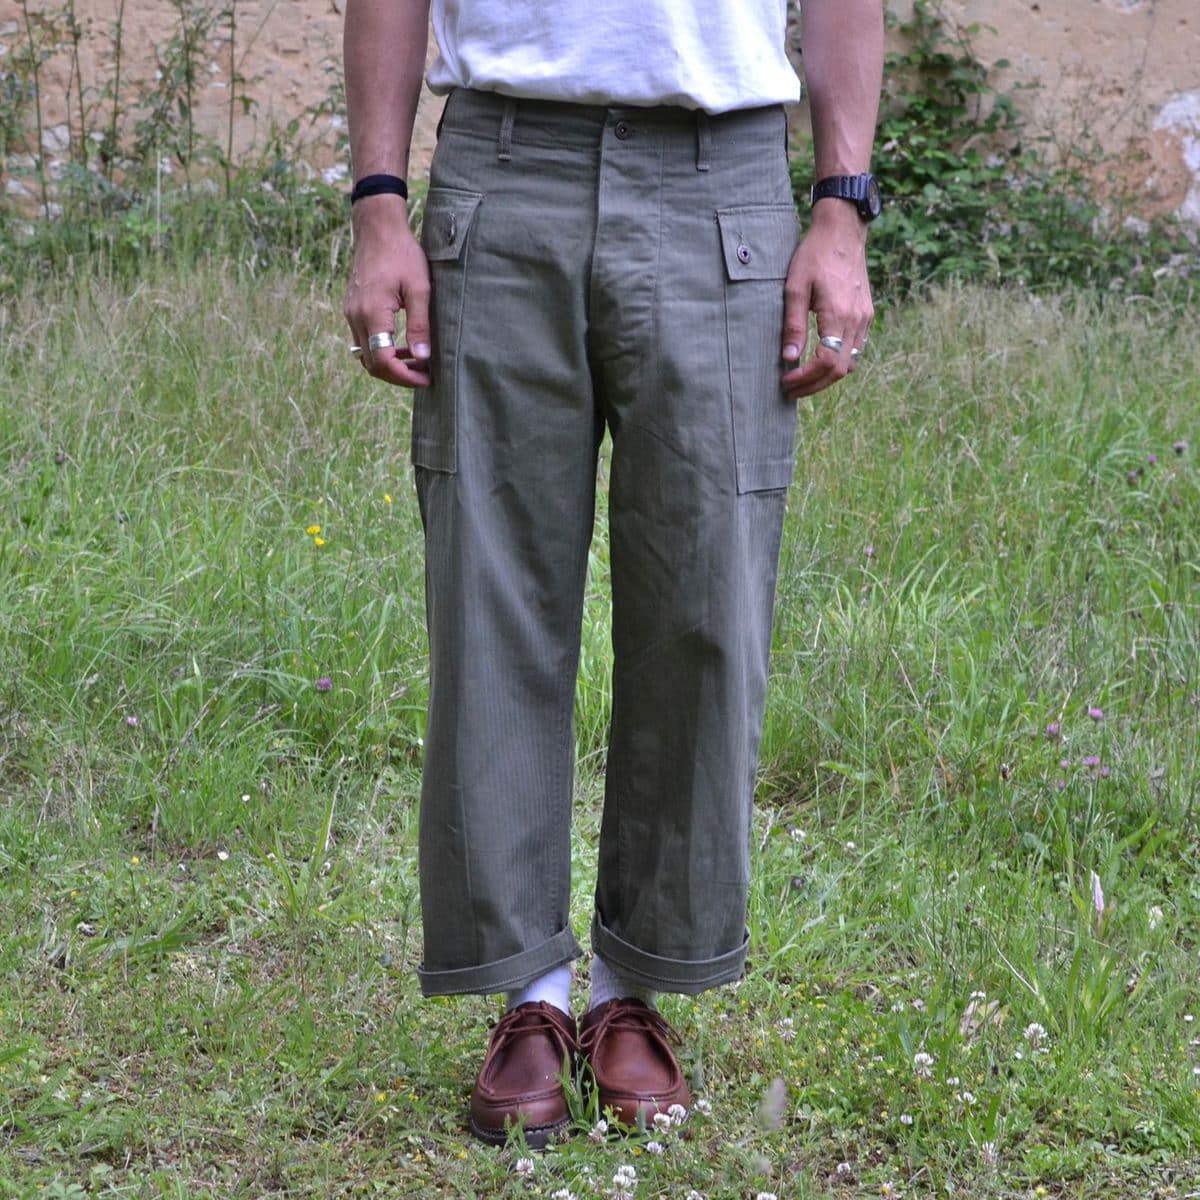 P47 poches cargo arashi denim marque pantalon militaire